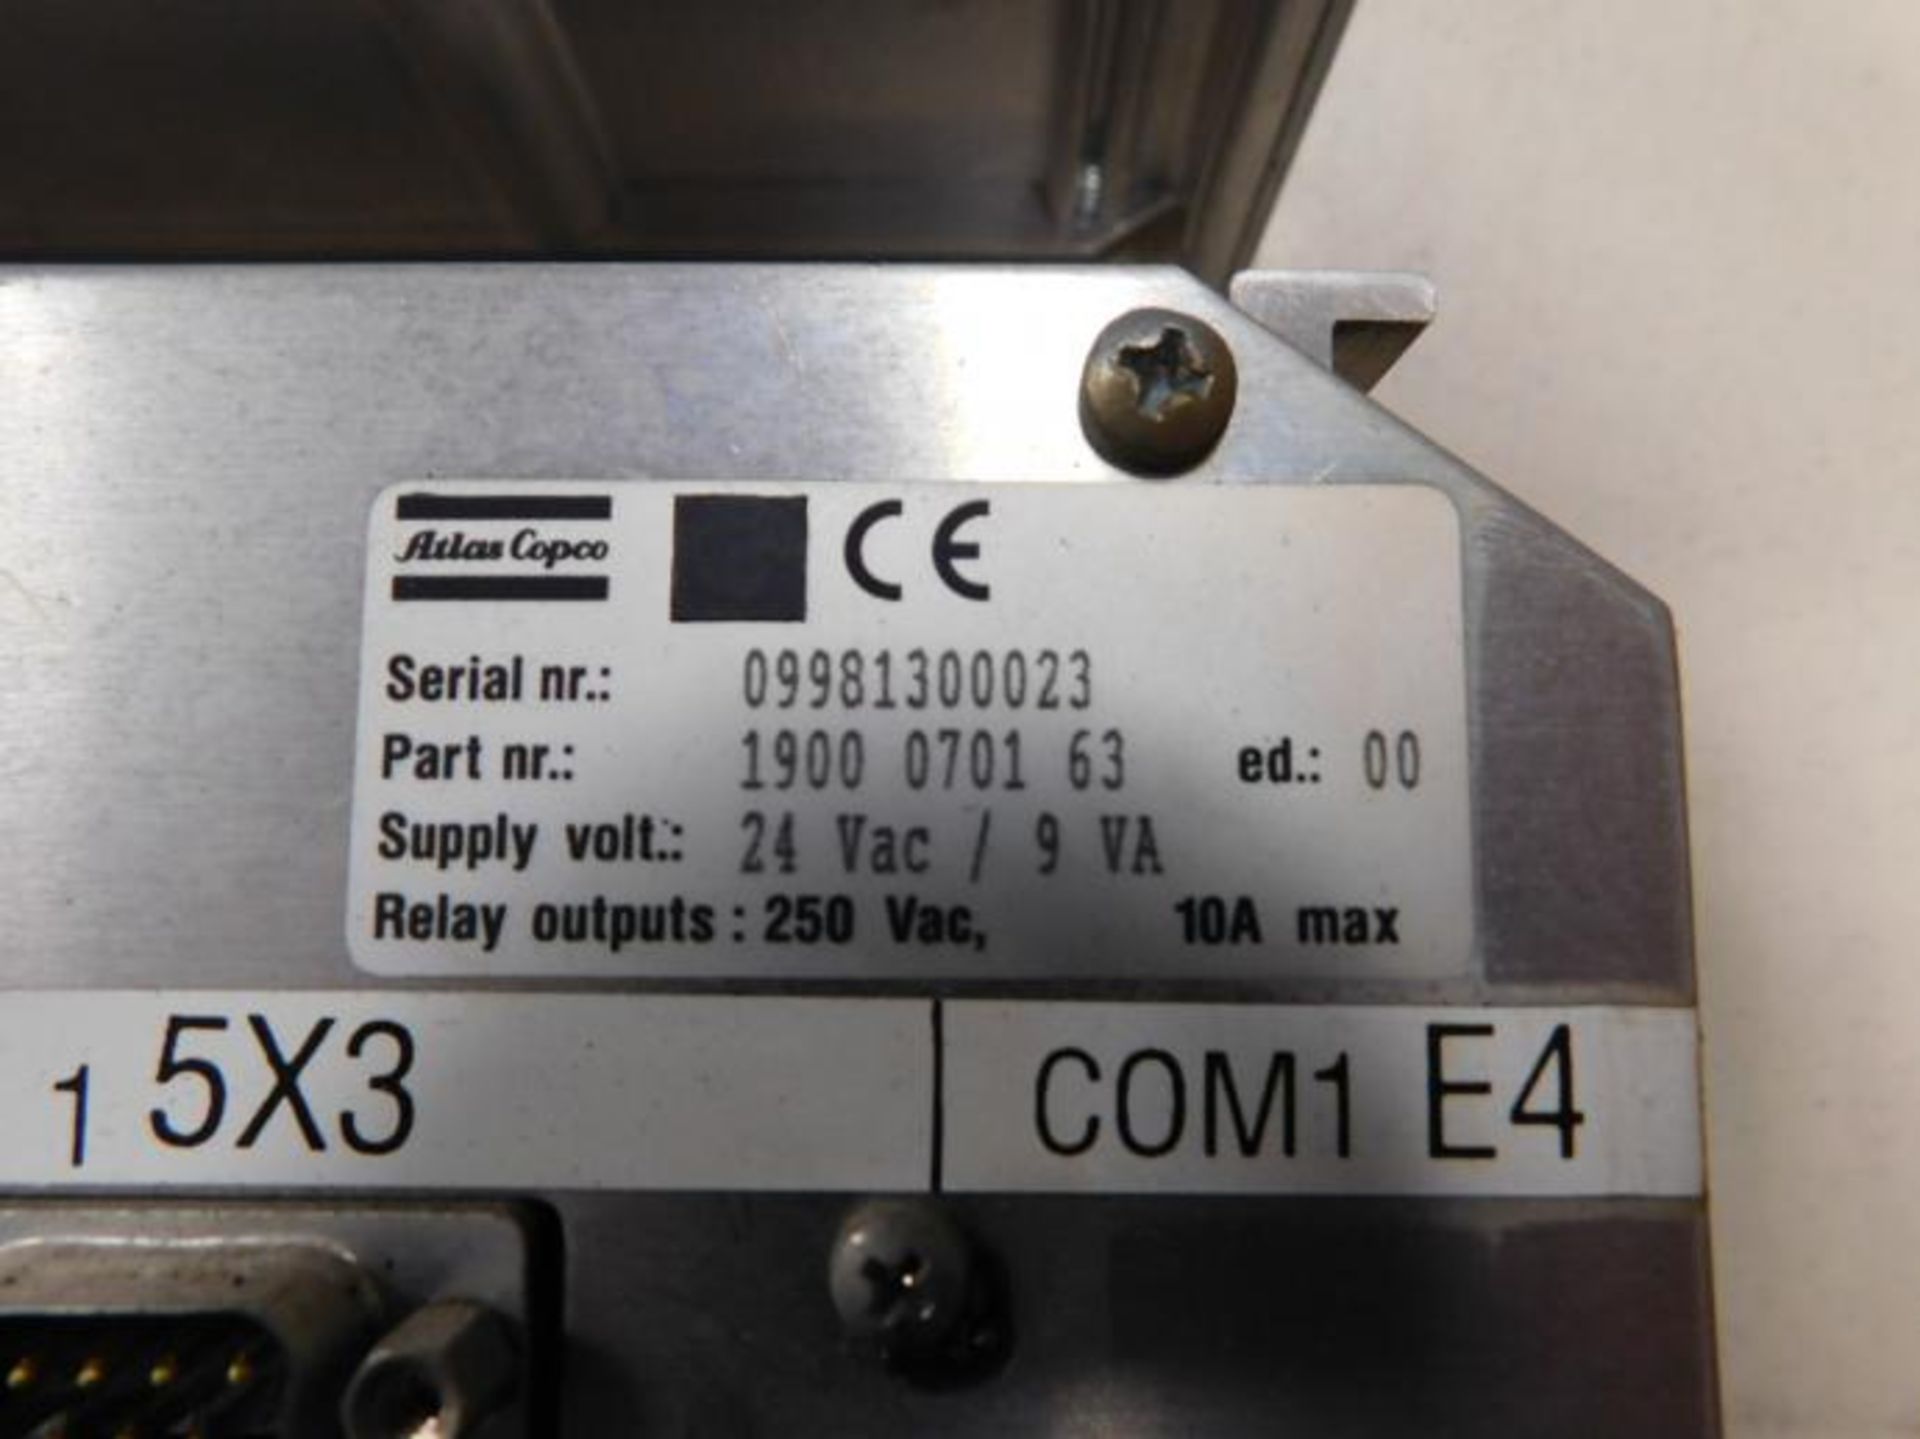 Atlas copco elektronikon control panel - Image 4 of 8